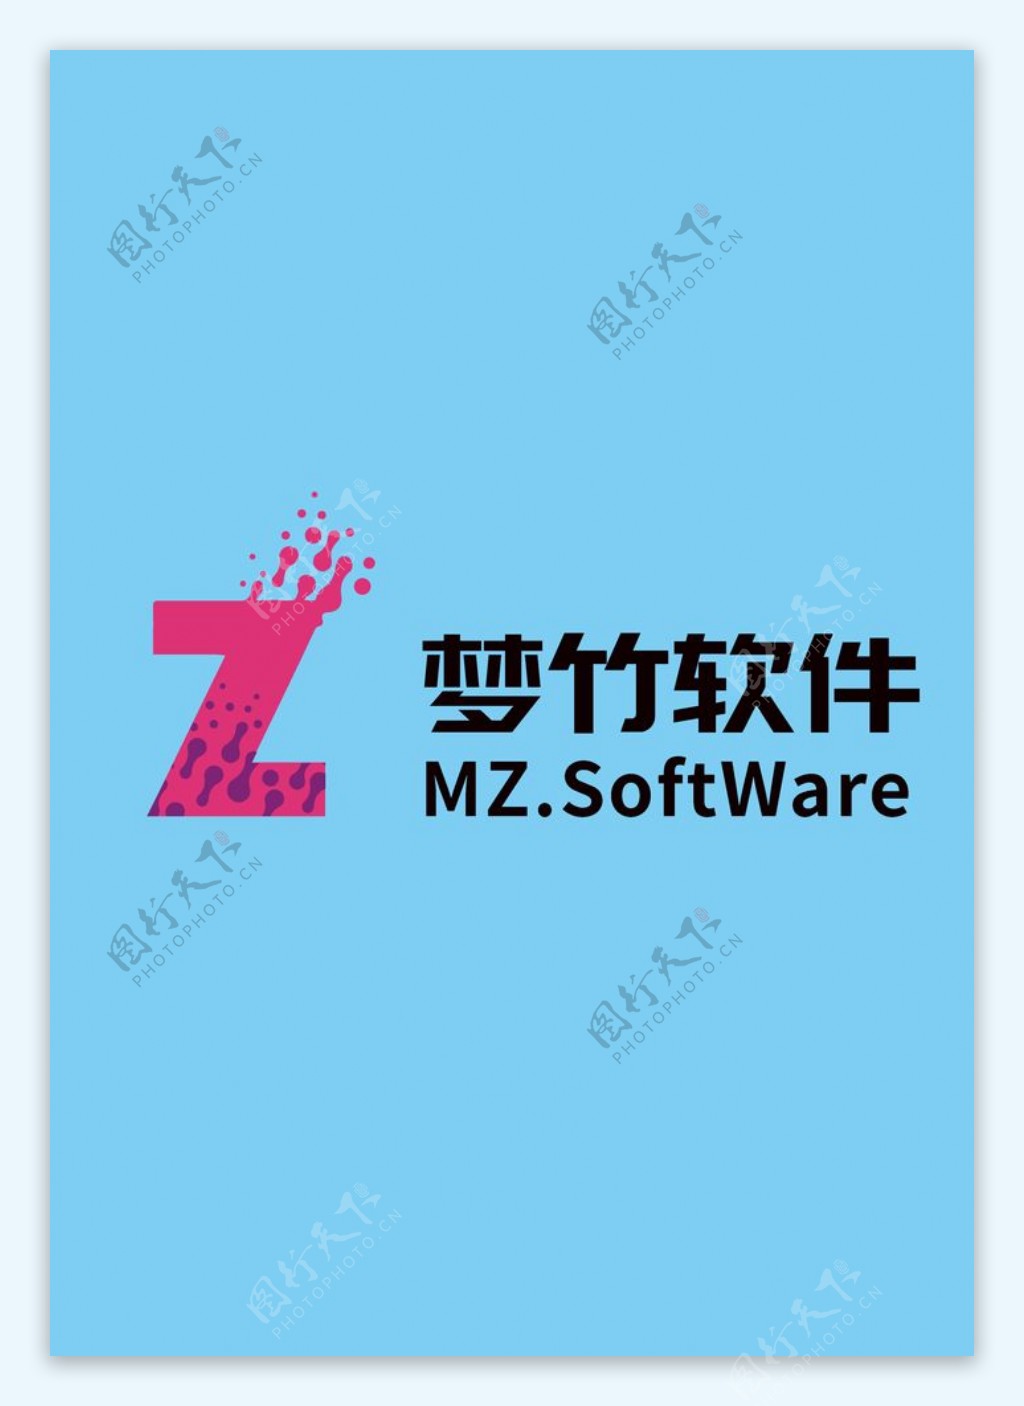 梦竹软件logo